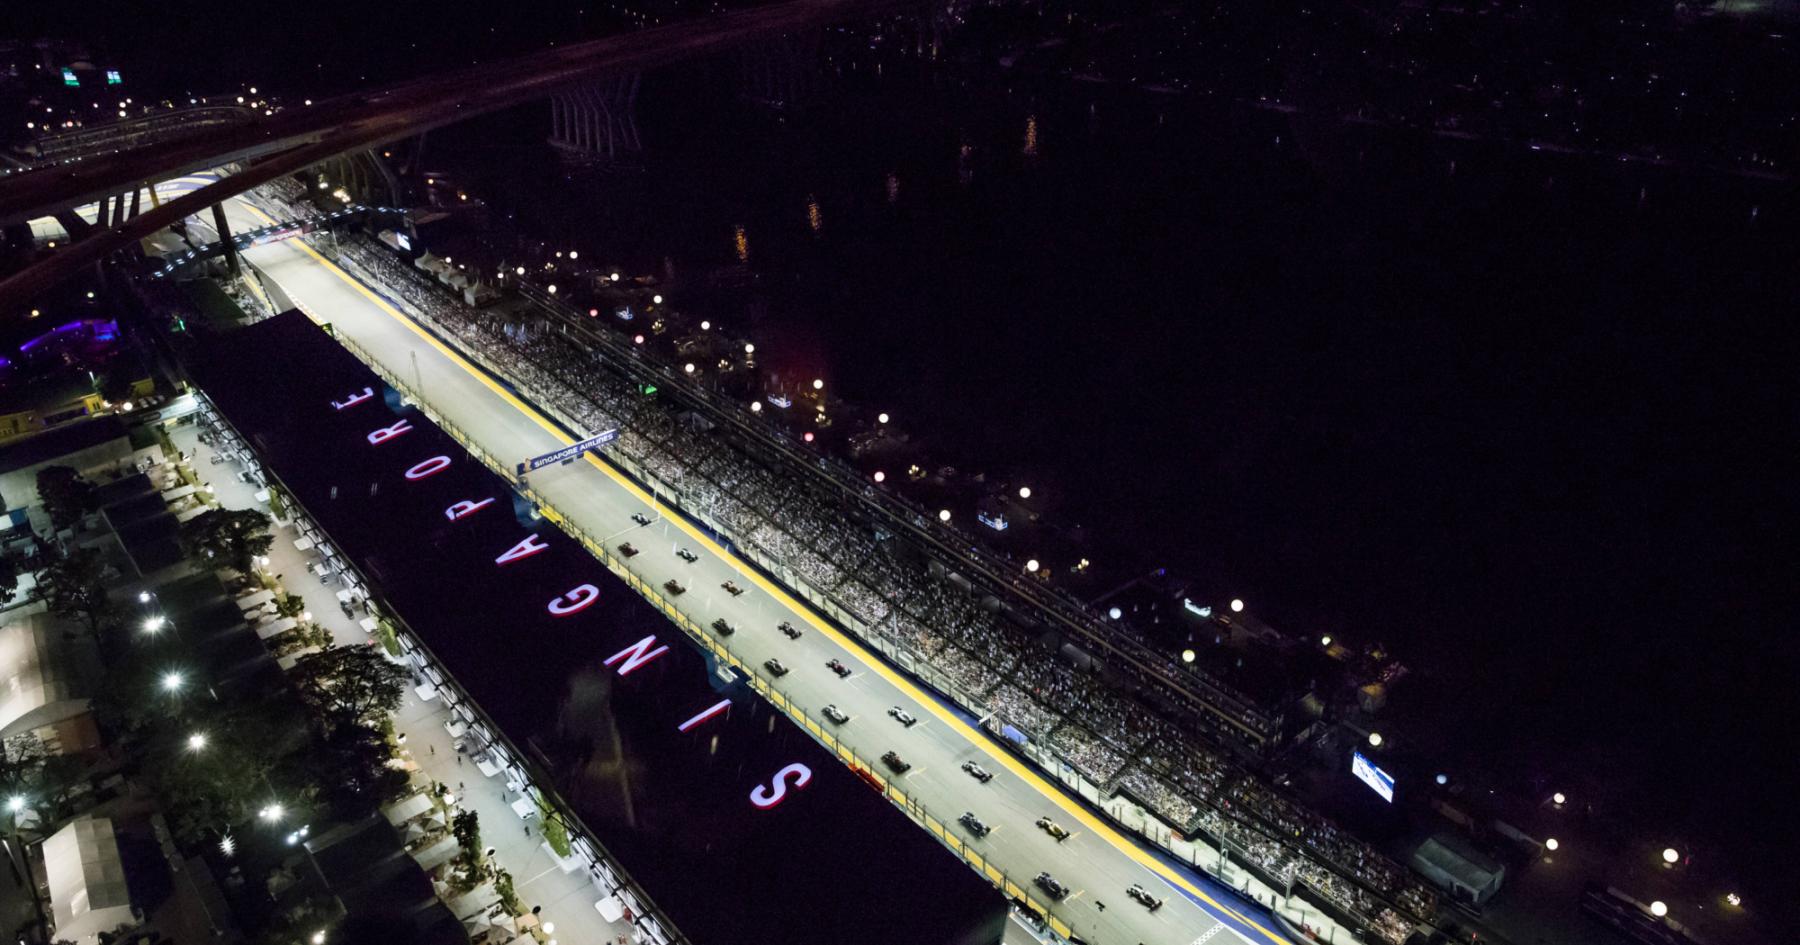 Singapore Grand Prix: Government dismisses corruption allegations, ensuring vibrant future for iconic race